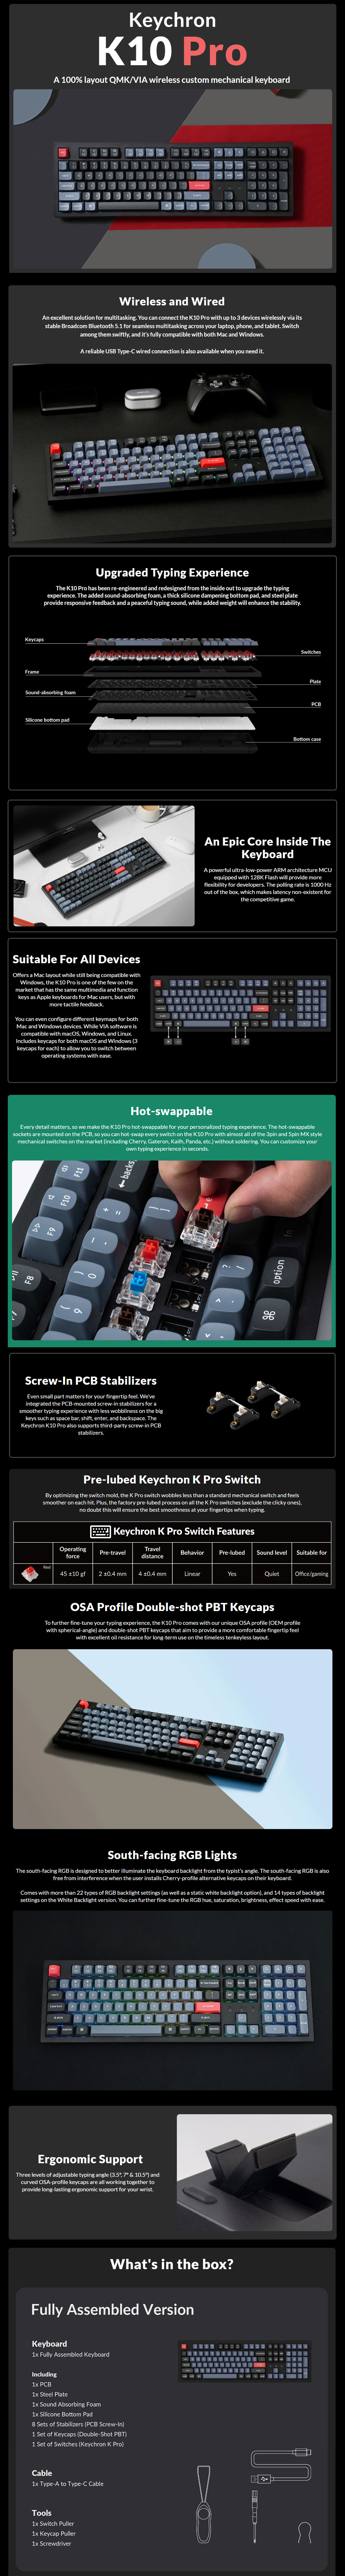 Keyboards-Keychron-K10-Pro-QMK-VIA-Wireless-Keyboard-RGB-Backlit-Hot-Swappable-Keychron-K-Pro-Mechanical-Keyboard-Red-Switch-K10P-H1-1